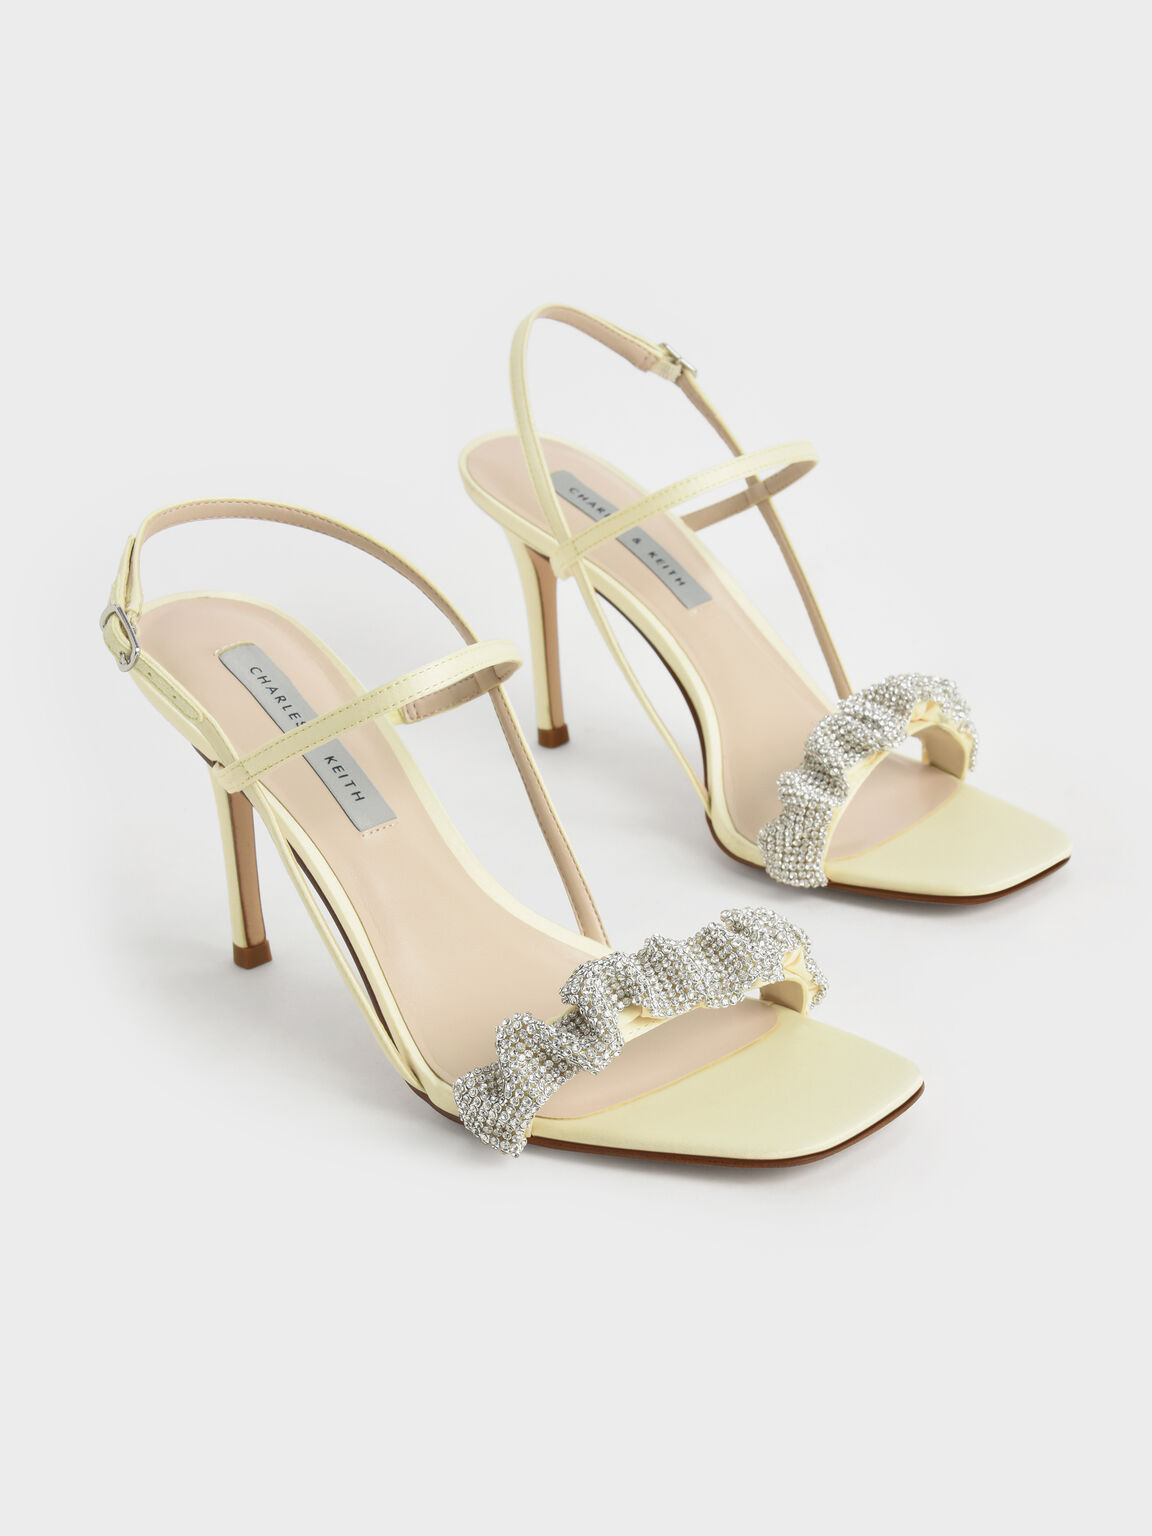 Gem-Embellished Satin Stiletto Sandals, Yellow, hi-res